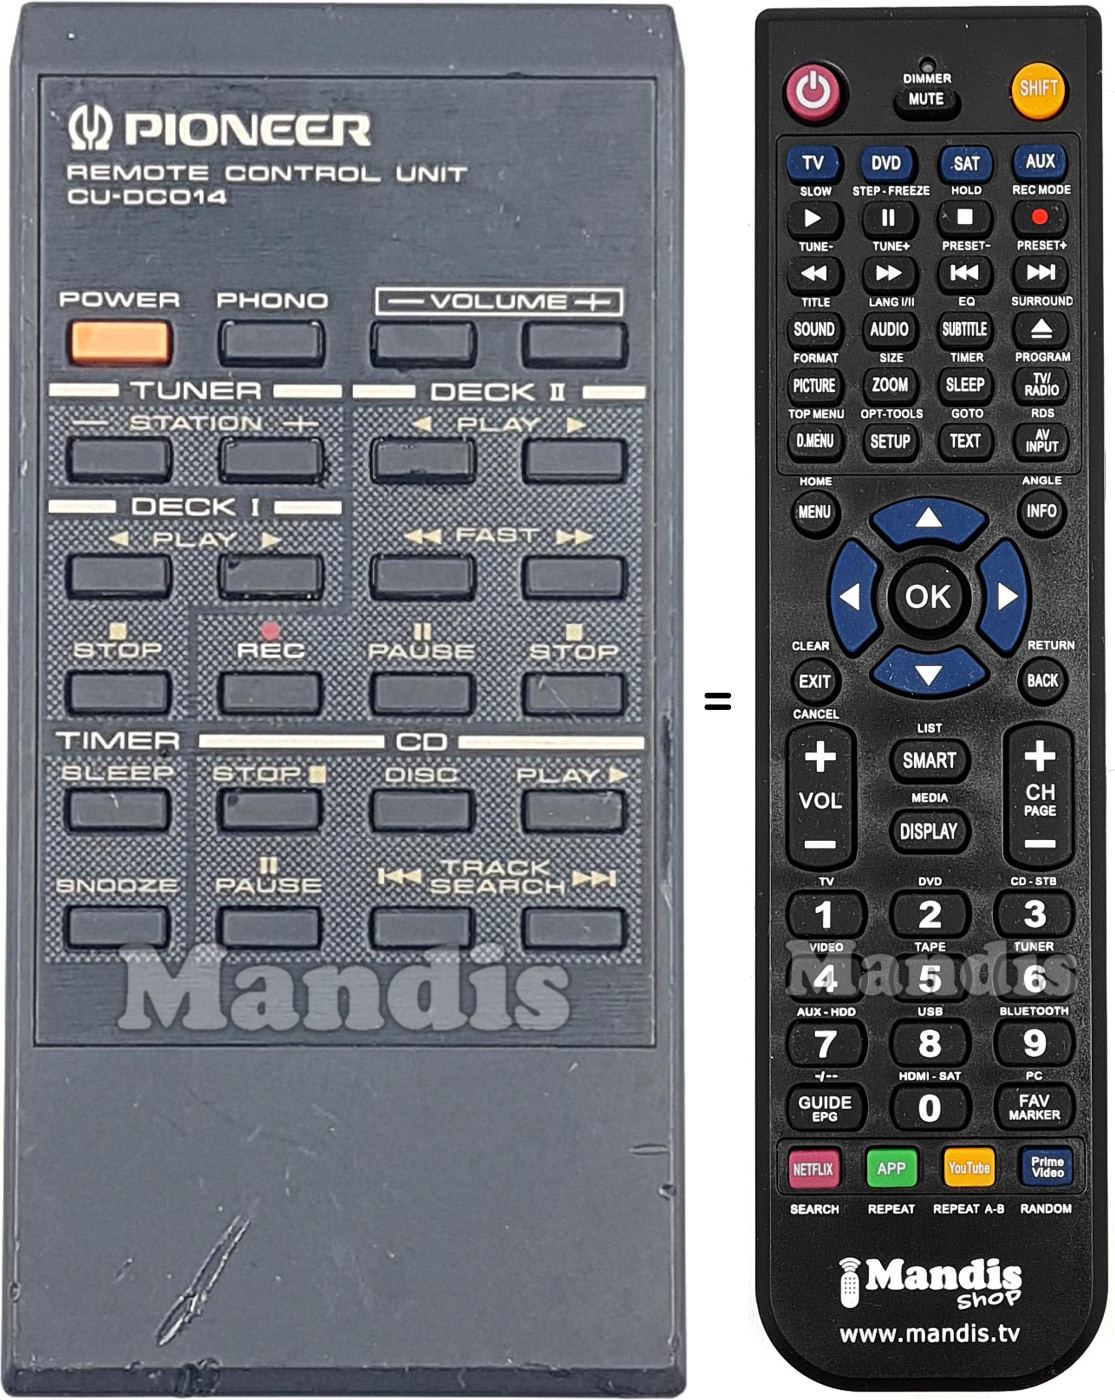 Replacement remote control Pioneer CU-DC014